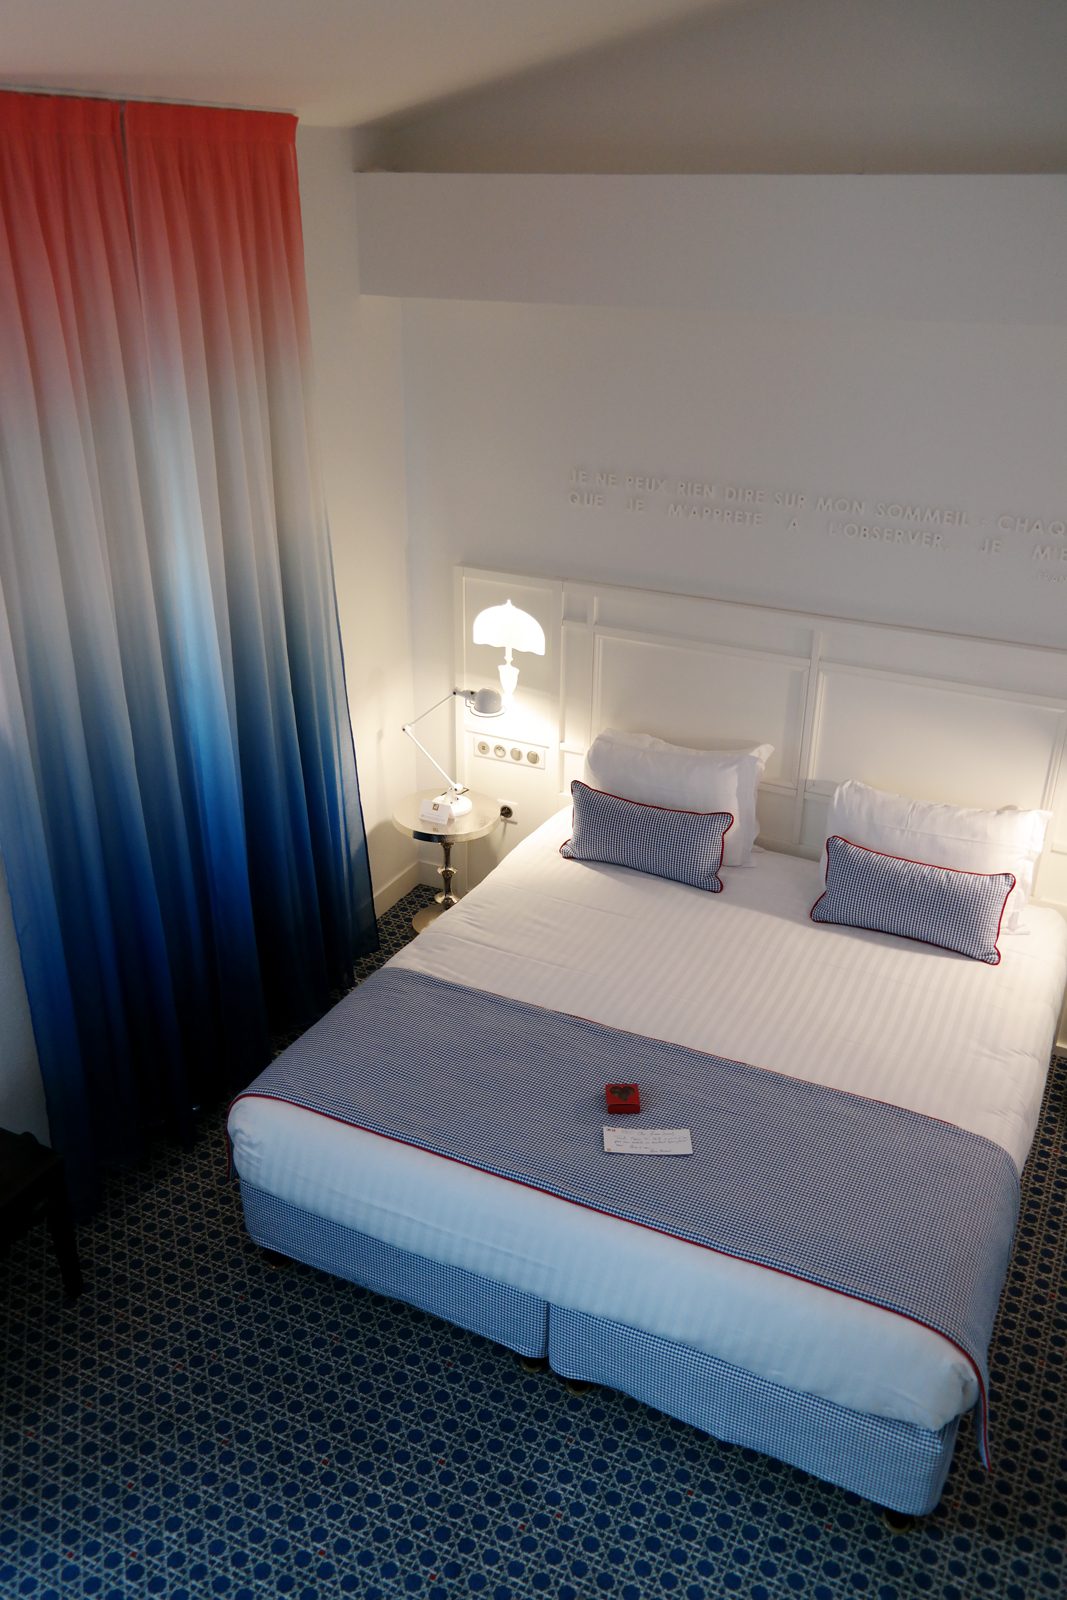 Hotel le 34B astotel paris 34 rue Bergere duplex room king size-bed booking french design tricolor curtain photo usofparis blog